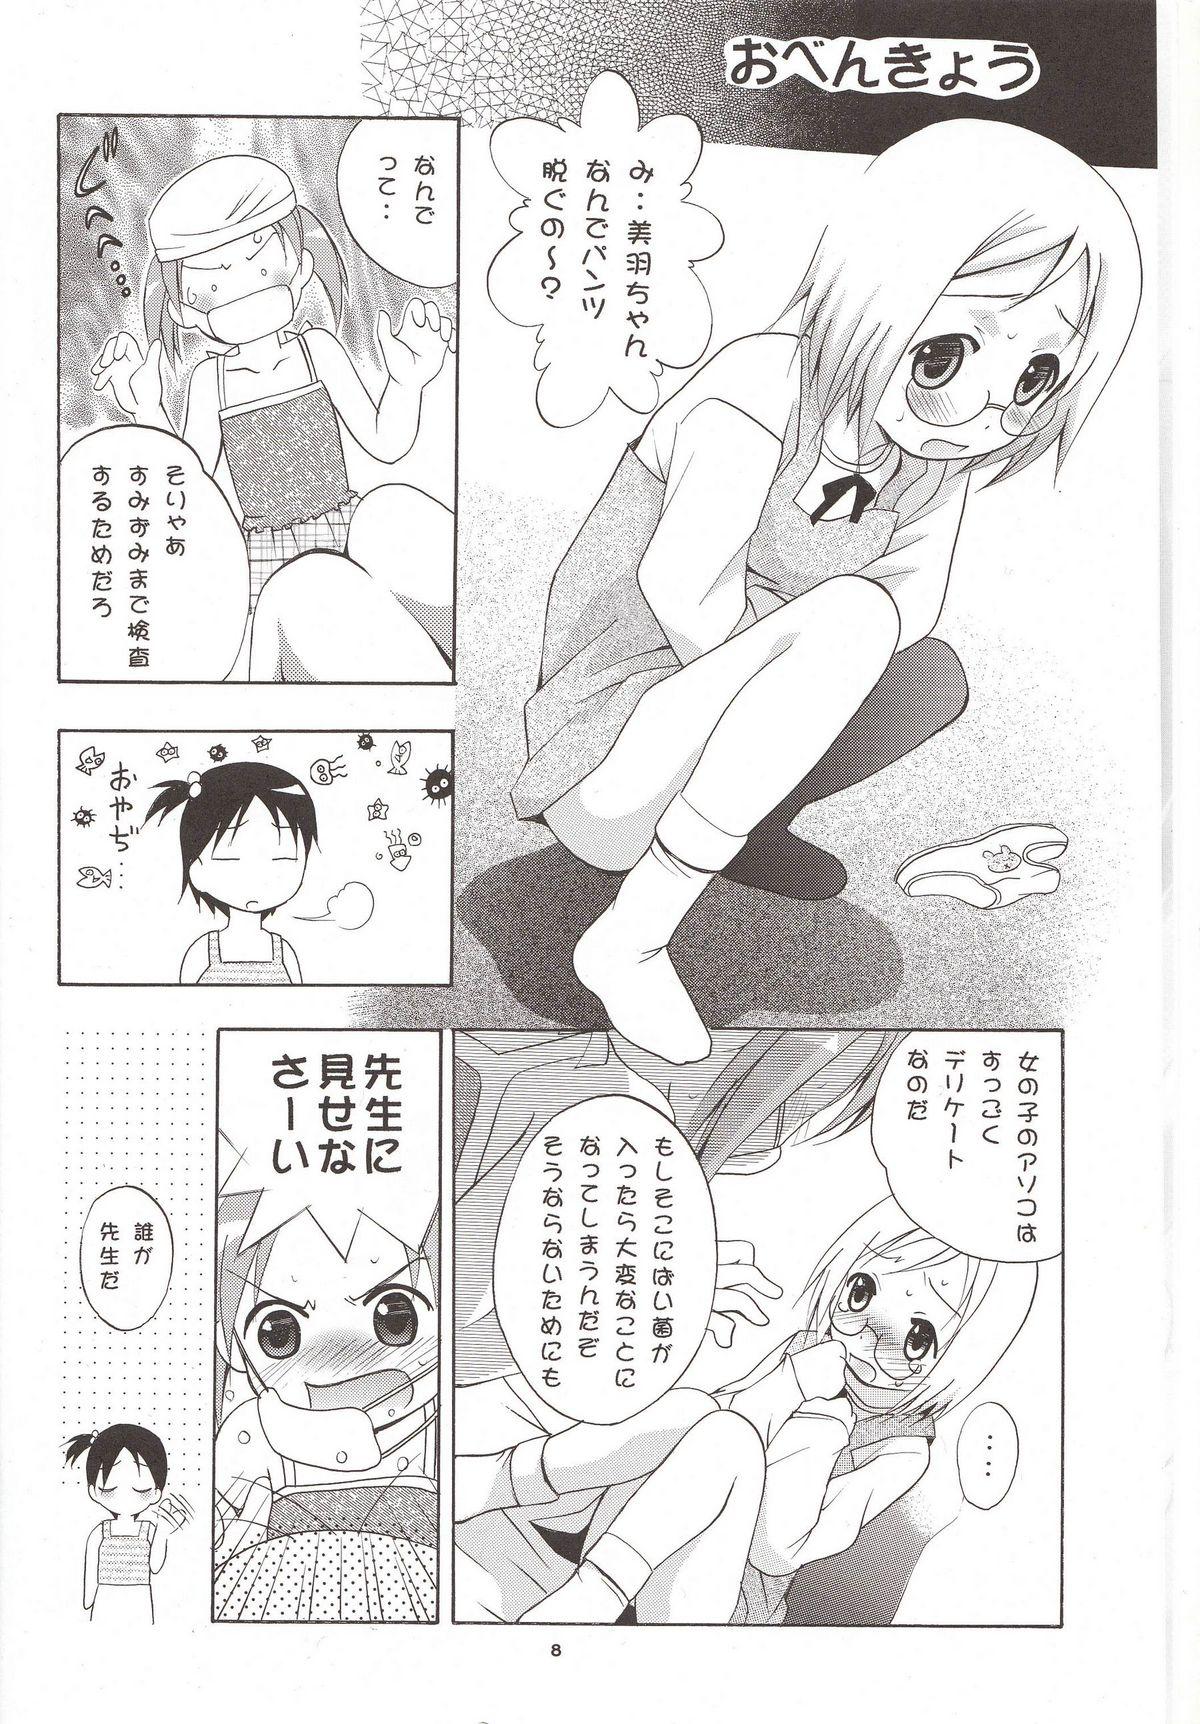 Peludo Mousou Mini Theater 16 - Ichigo mashimaro Muscular - Page 7